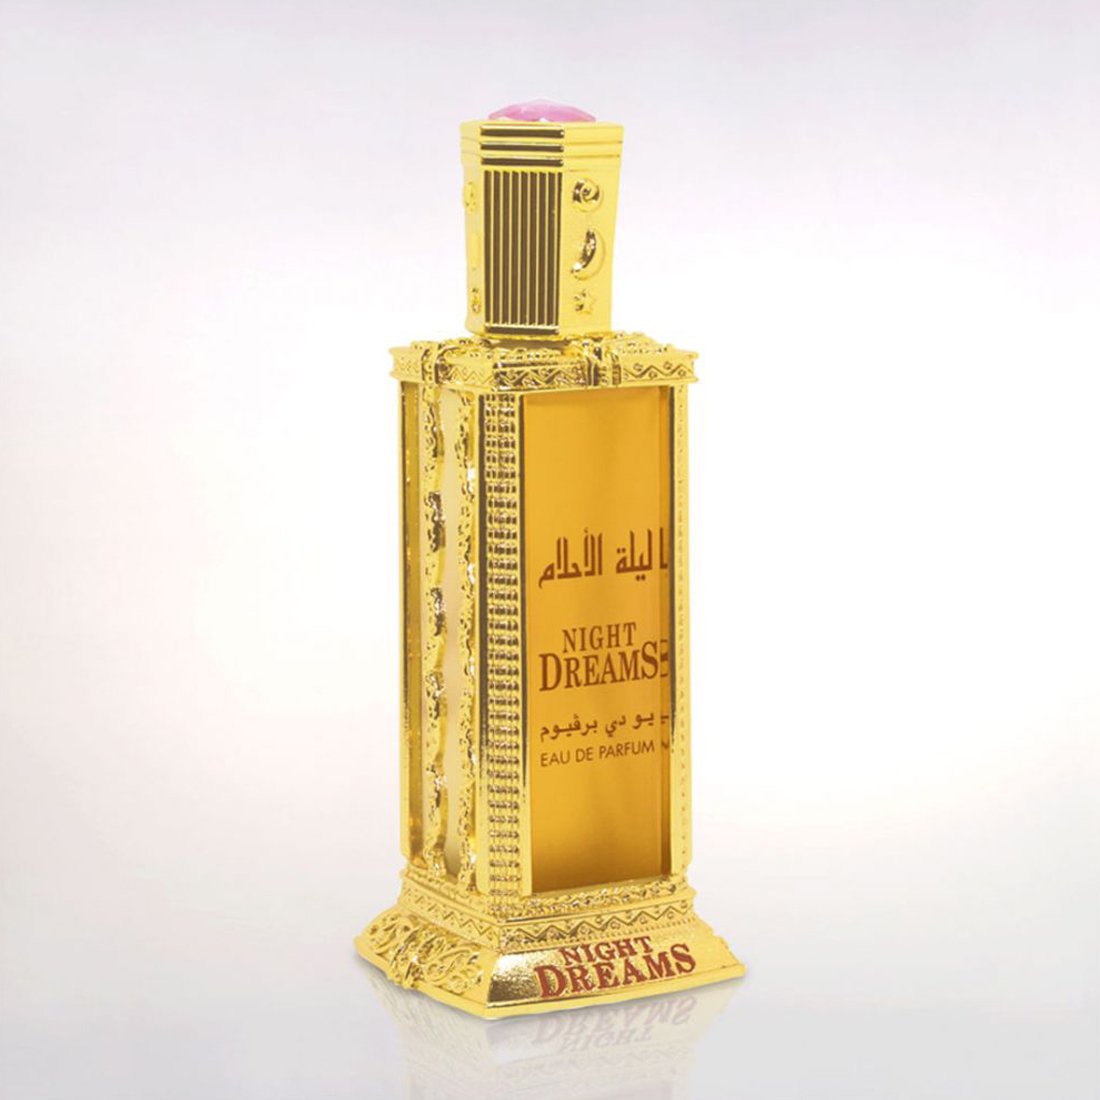 Al Haramain Night Dreams Perfume Spray - 60 ml